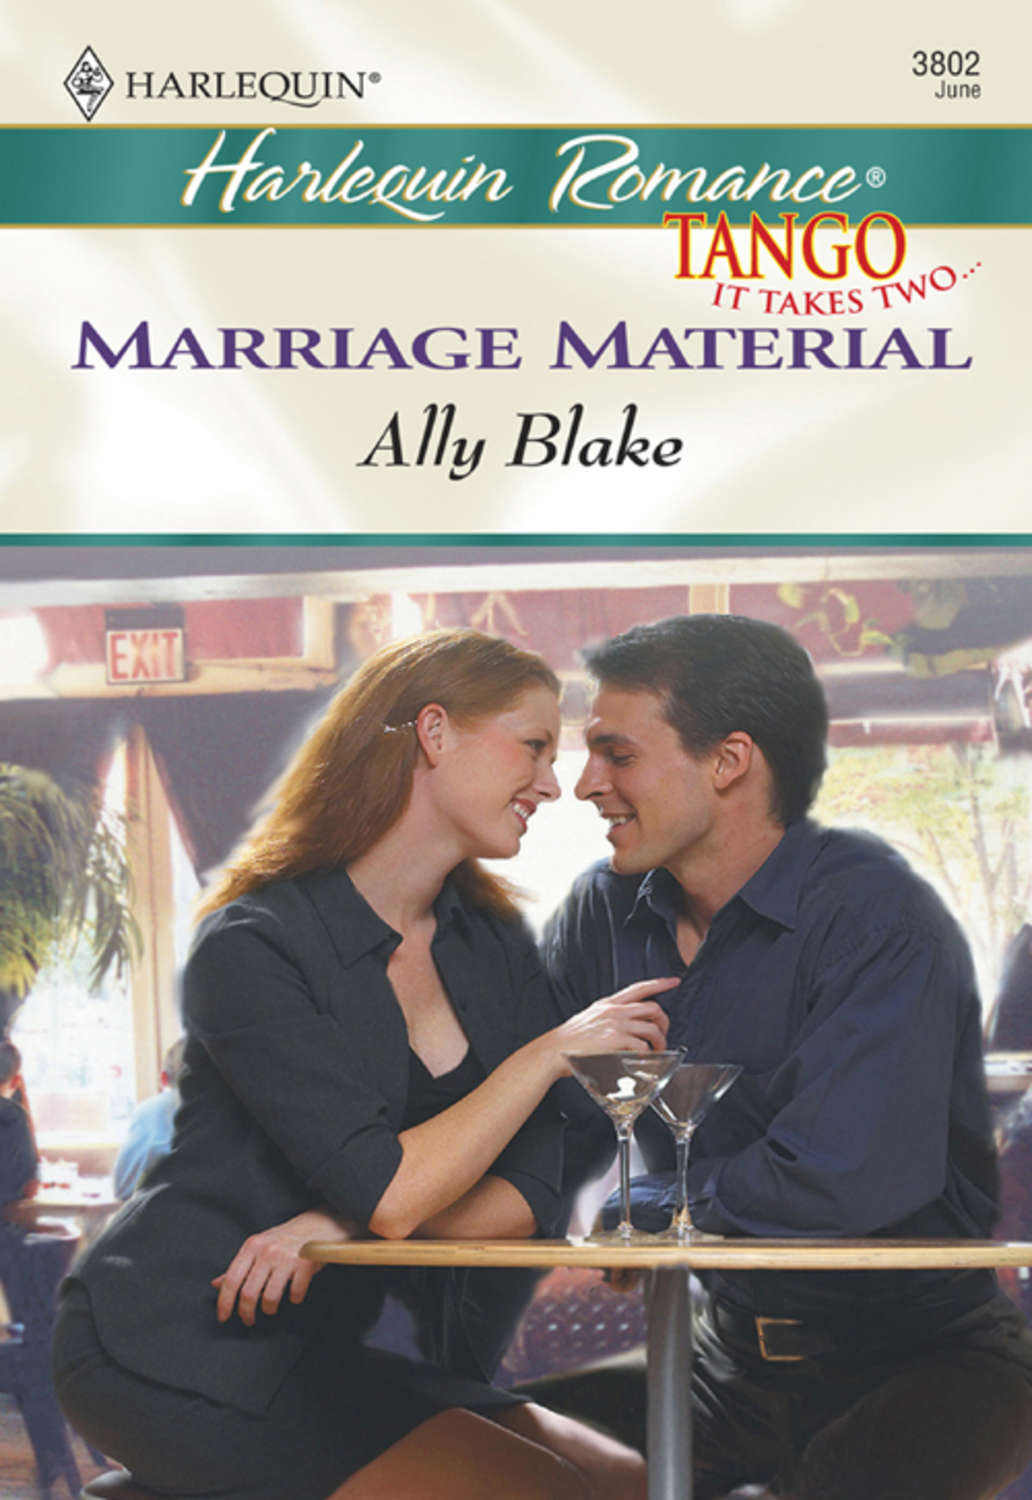 Читать книги про брак. Элли Блейк. Блейк Элли "придуманный жених". Книги про брак и семью. The Rules of marriage book.